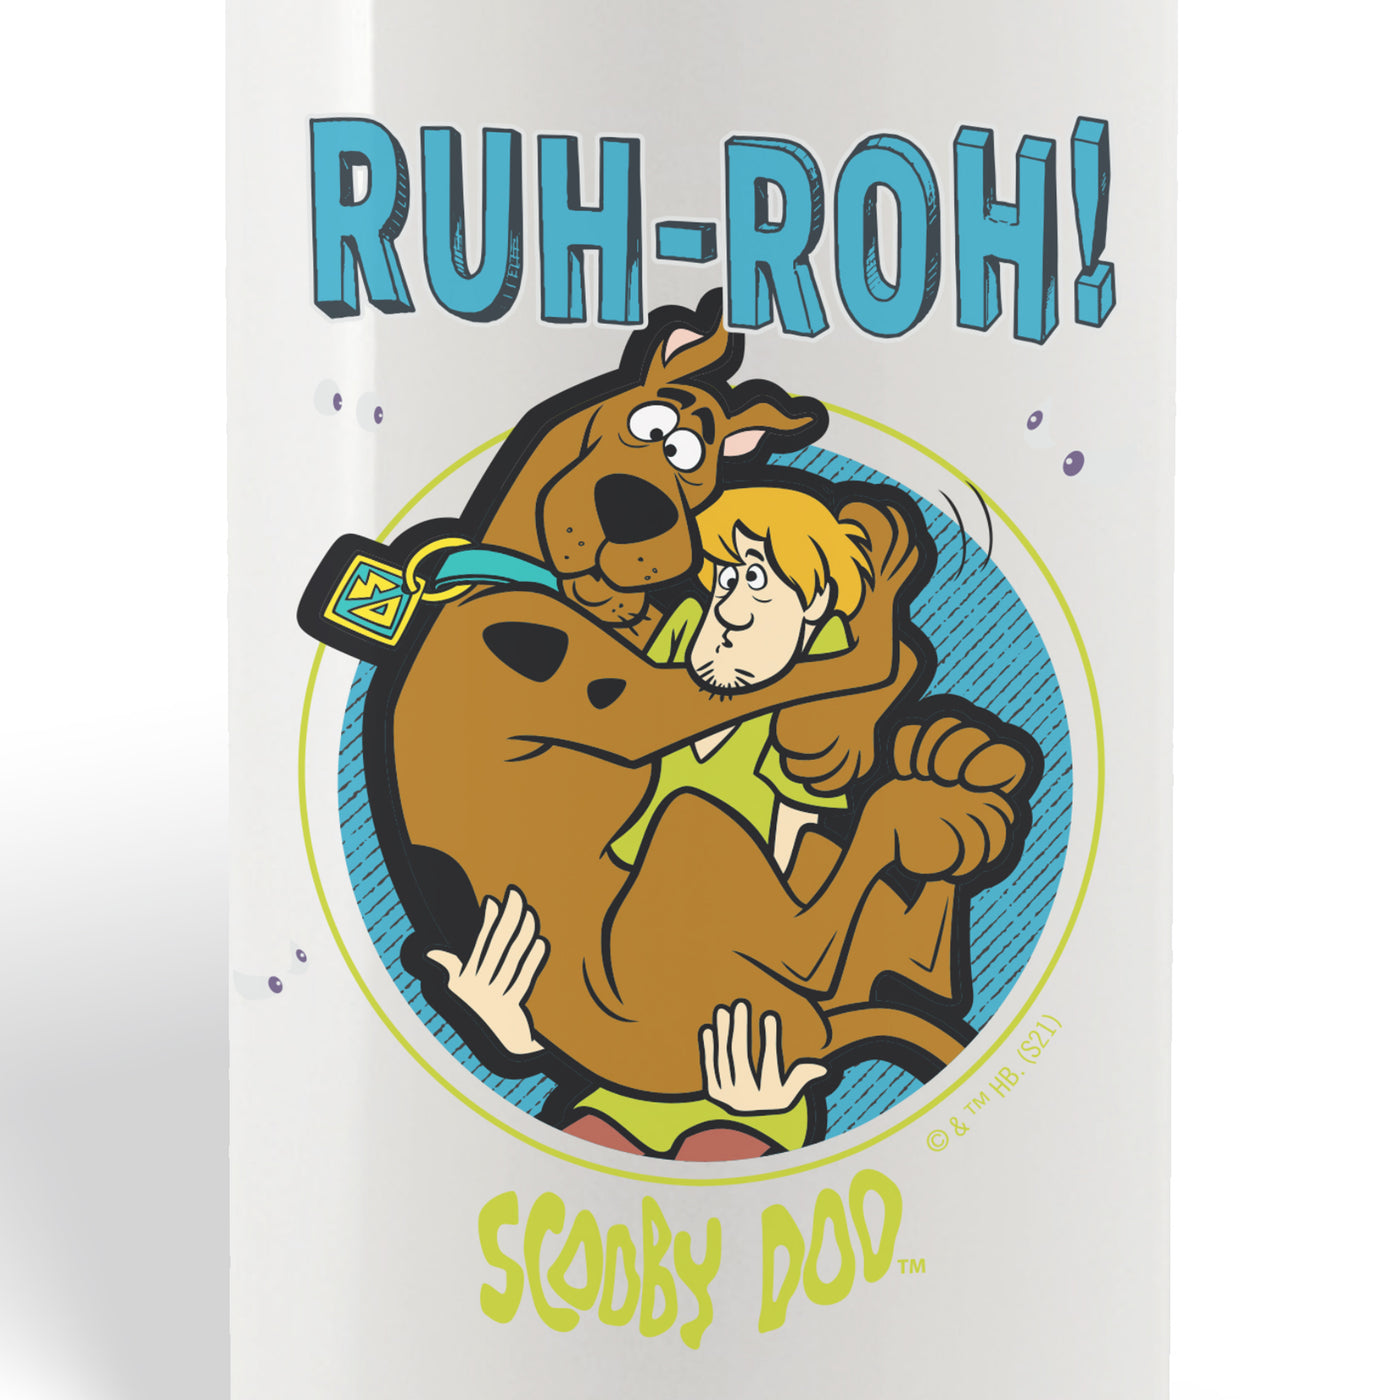 Scooby-Doo Ruh-Roh 20 oz Screw Top Water Bottle with Straw